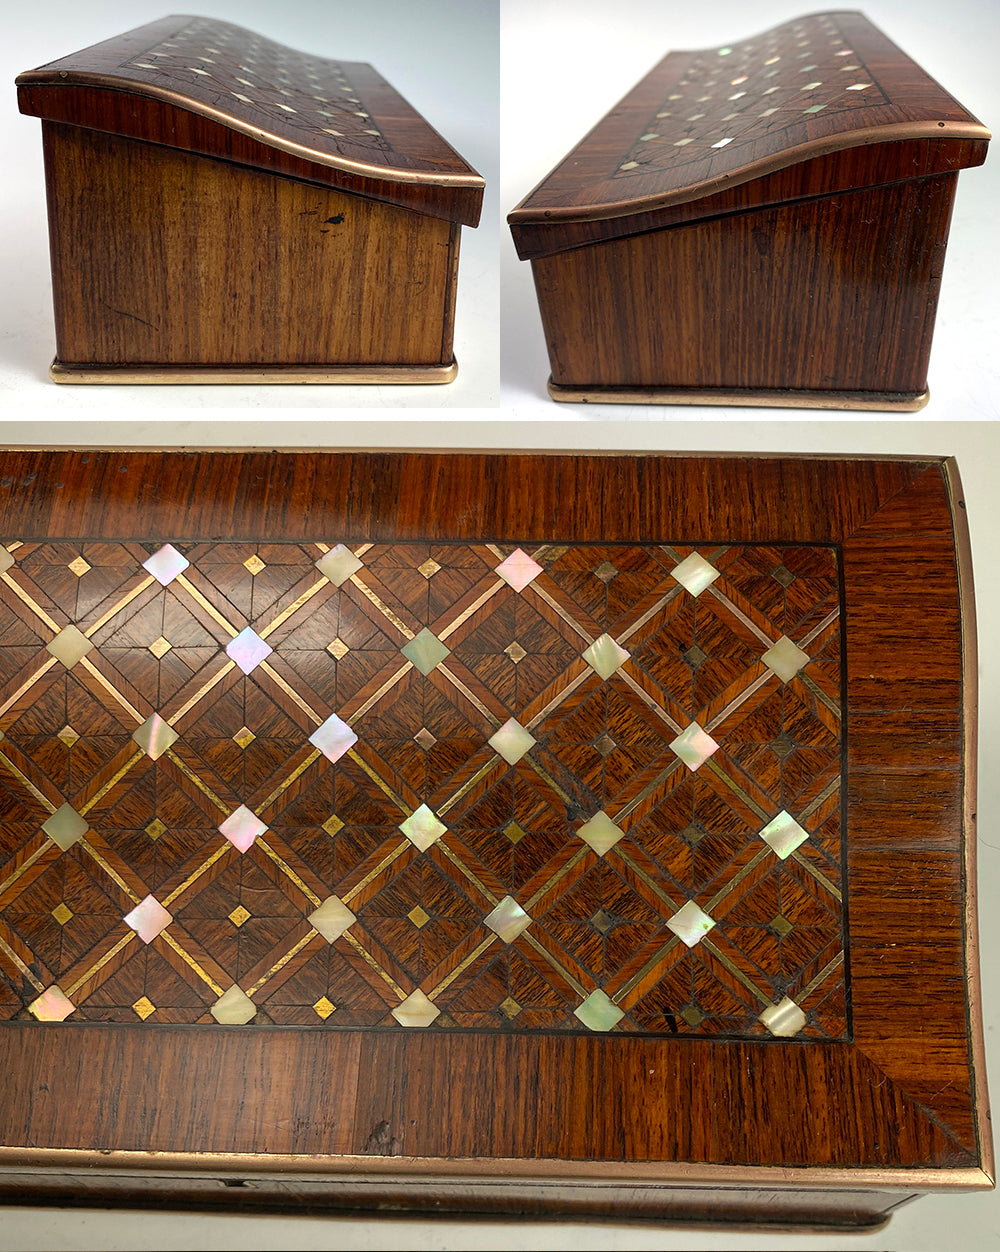 Opulent Antique TAHAN, Paris, Kingwood Desk Box w Double Inkwells, Pen Tray